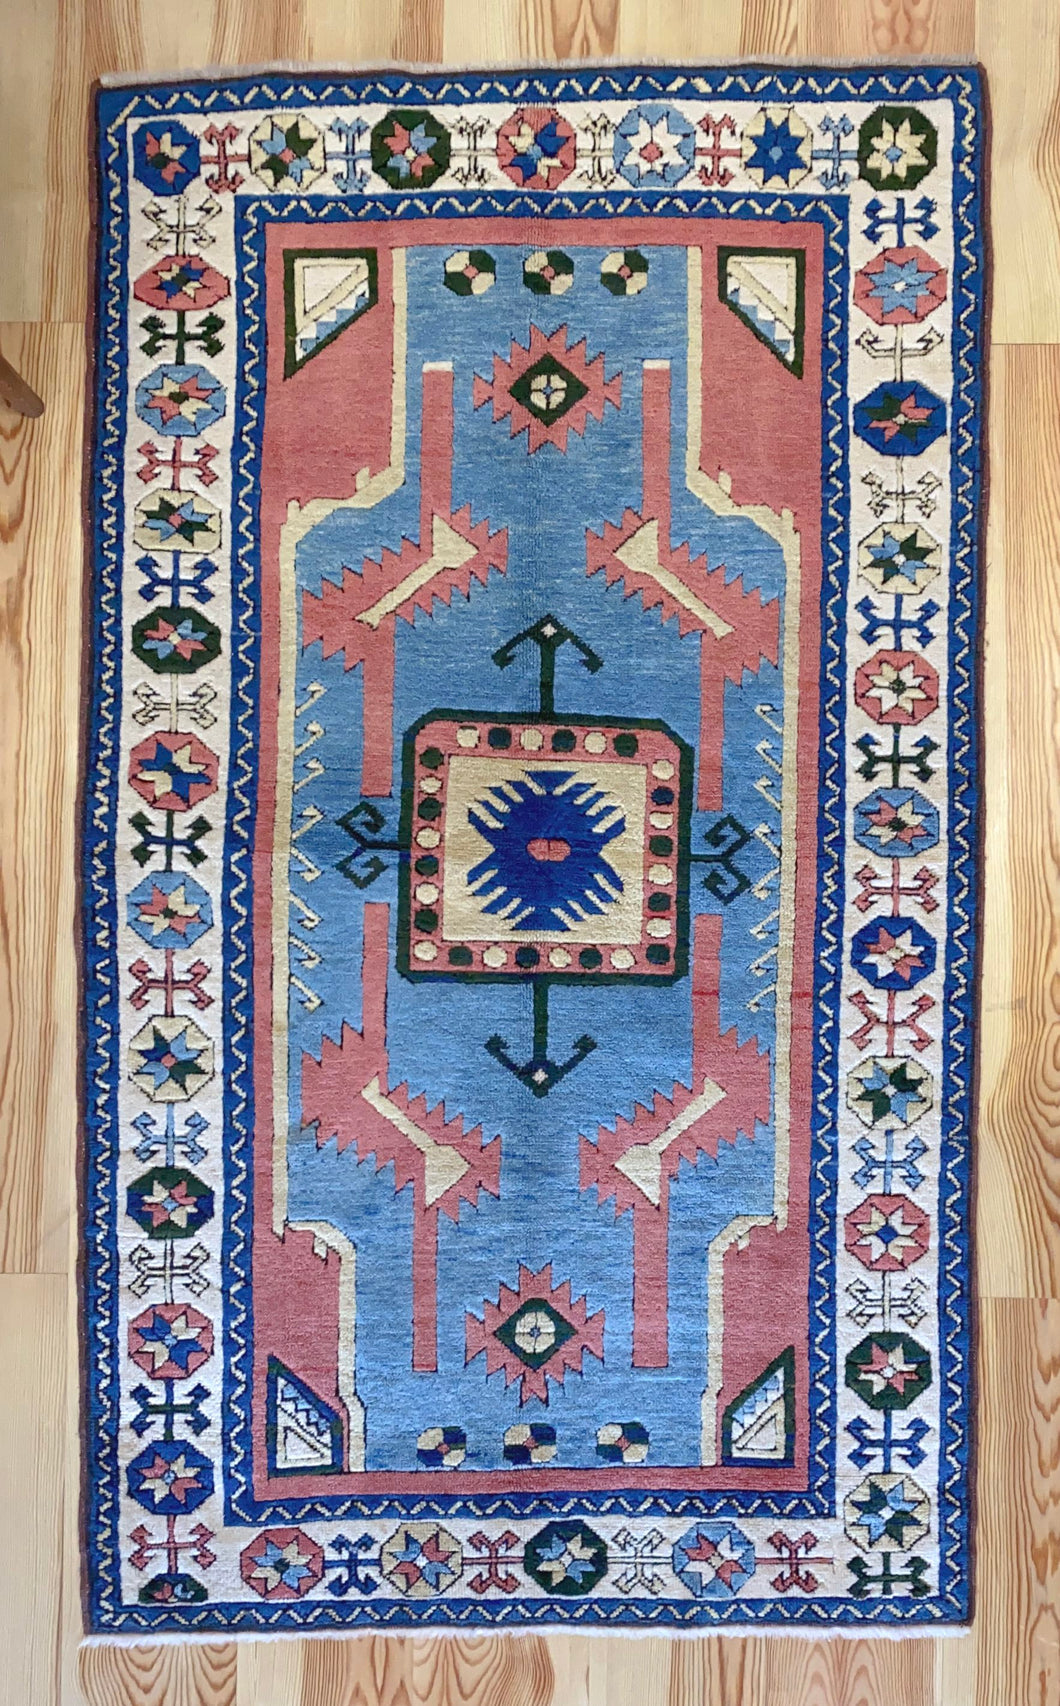 4x7 Vintage Central Anatolian Caucasian 'Kasim Usagi' Design 'Sultanhan' Turkish Area Rug | Geometric Medallion Soft Colors Stylized Motifs | SKU 621